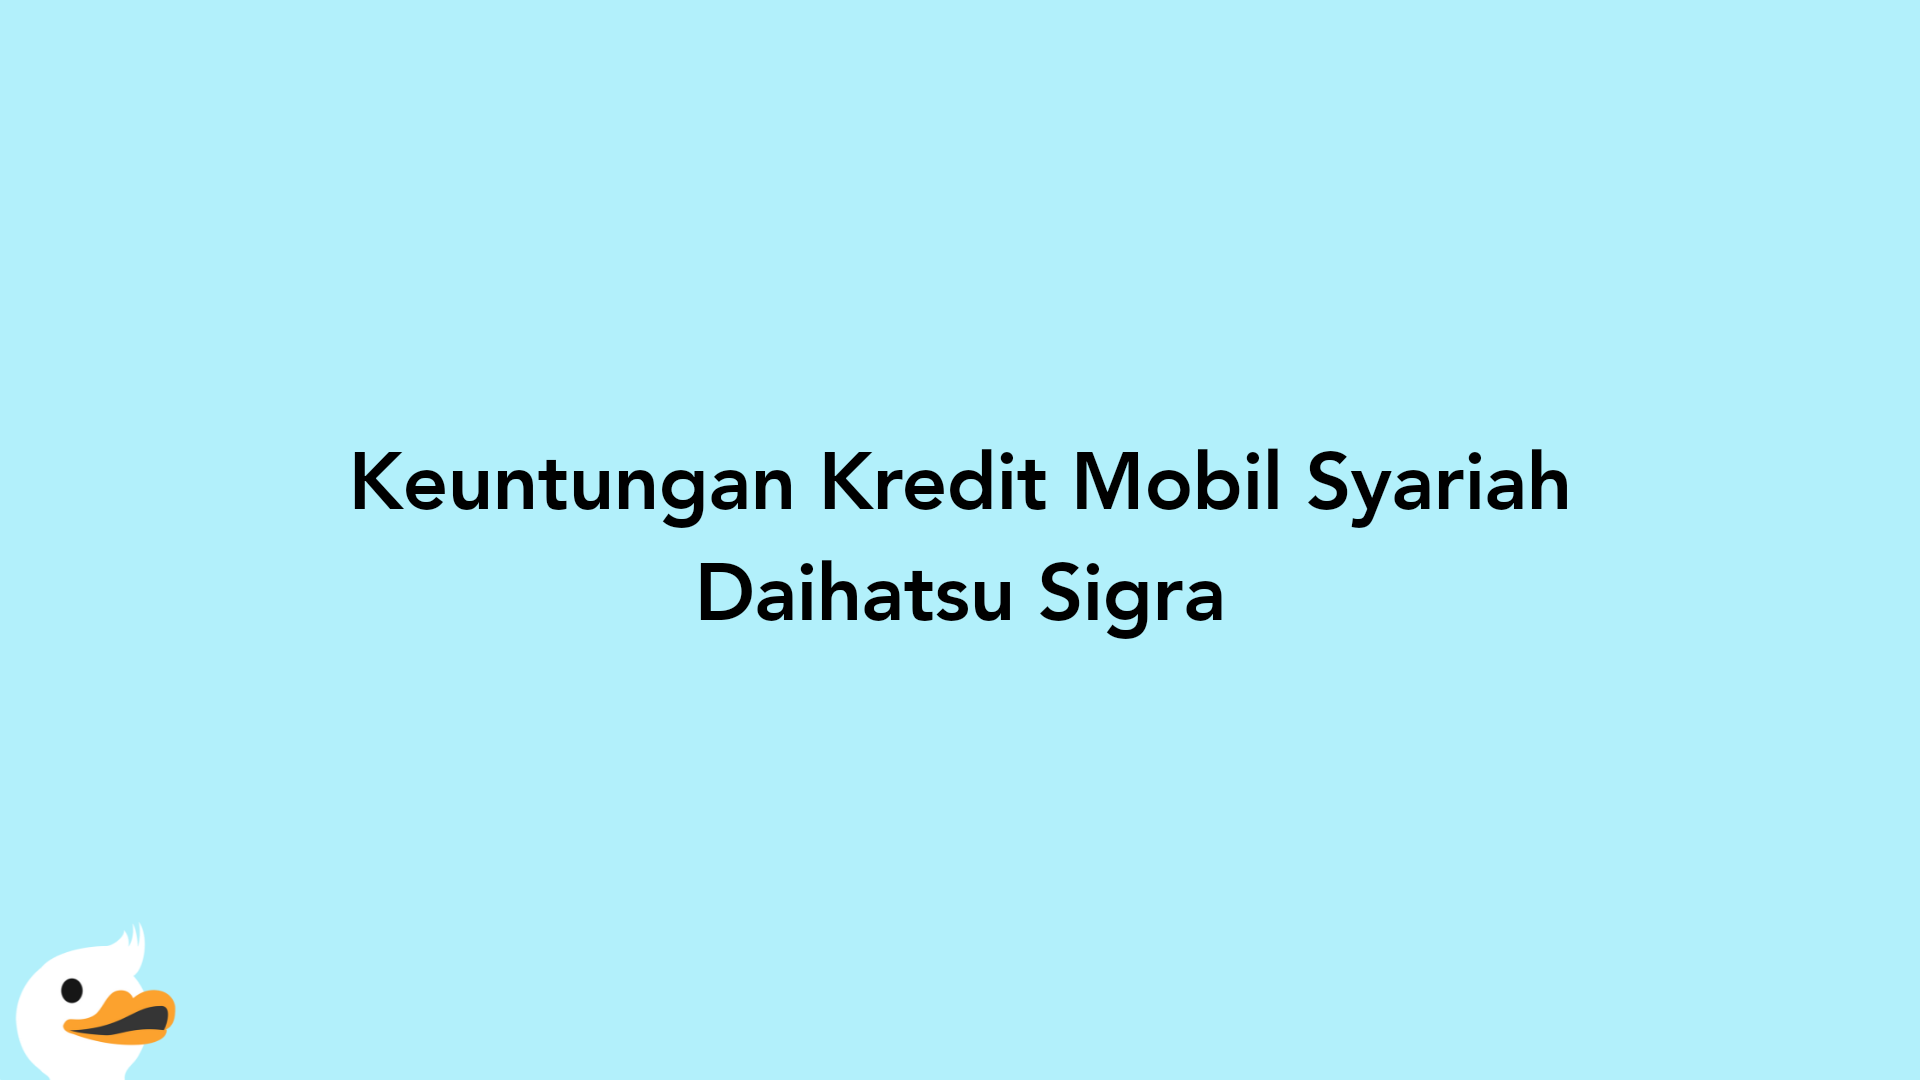 Keuntungan Kredit Mobil Syariah Daihatsu Sigra